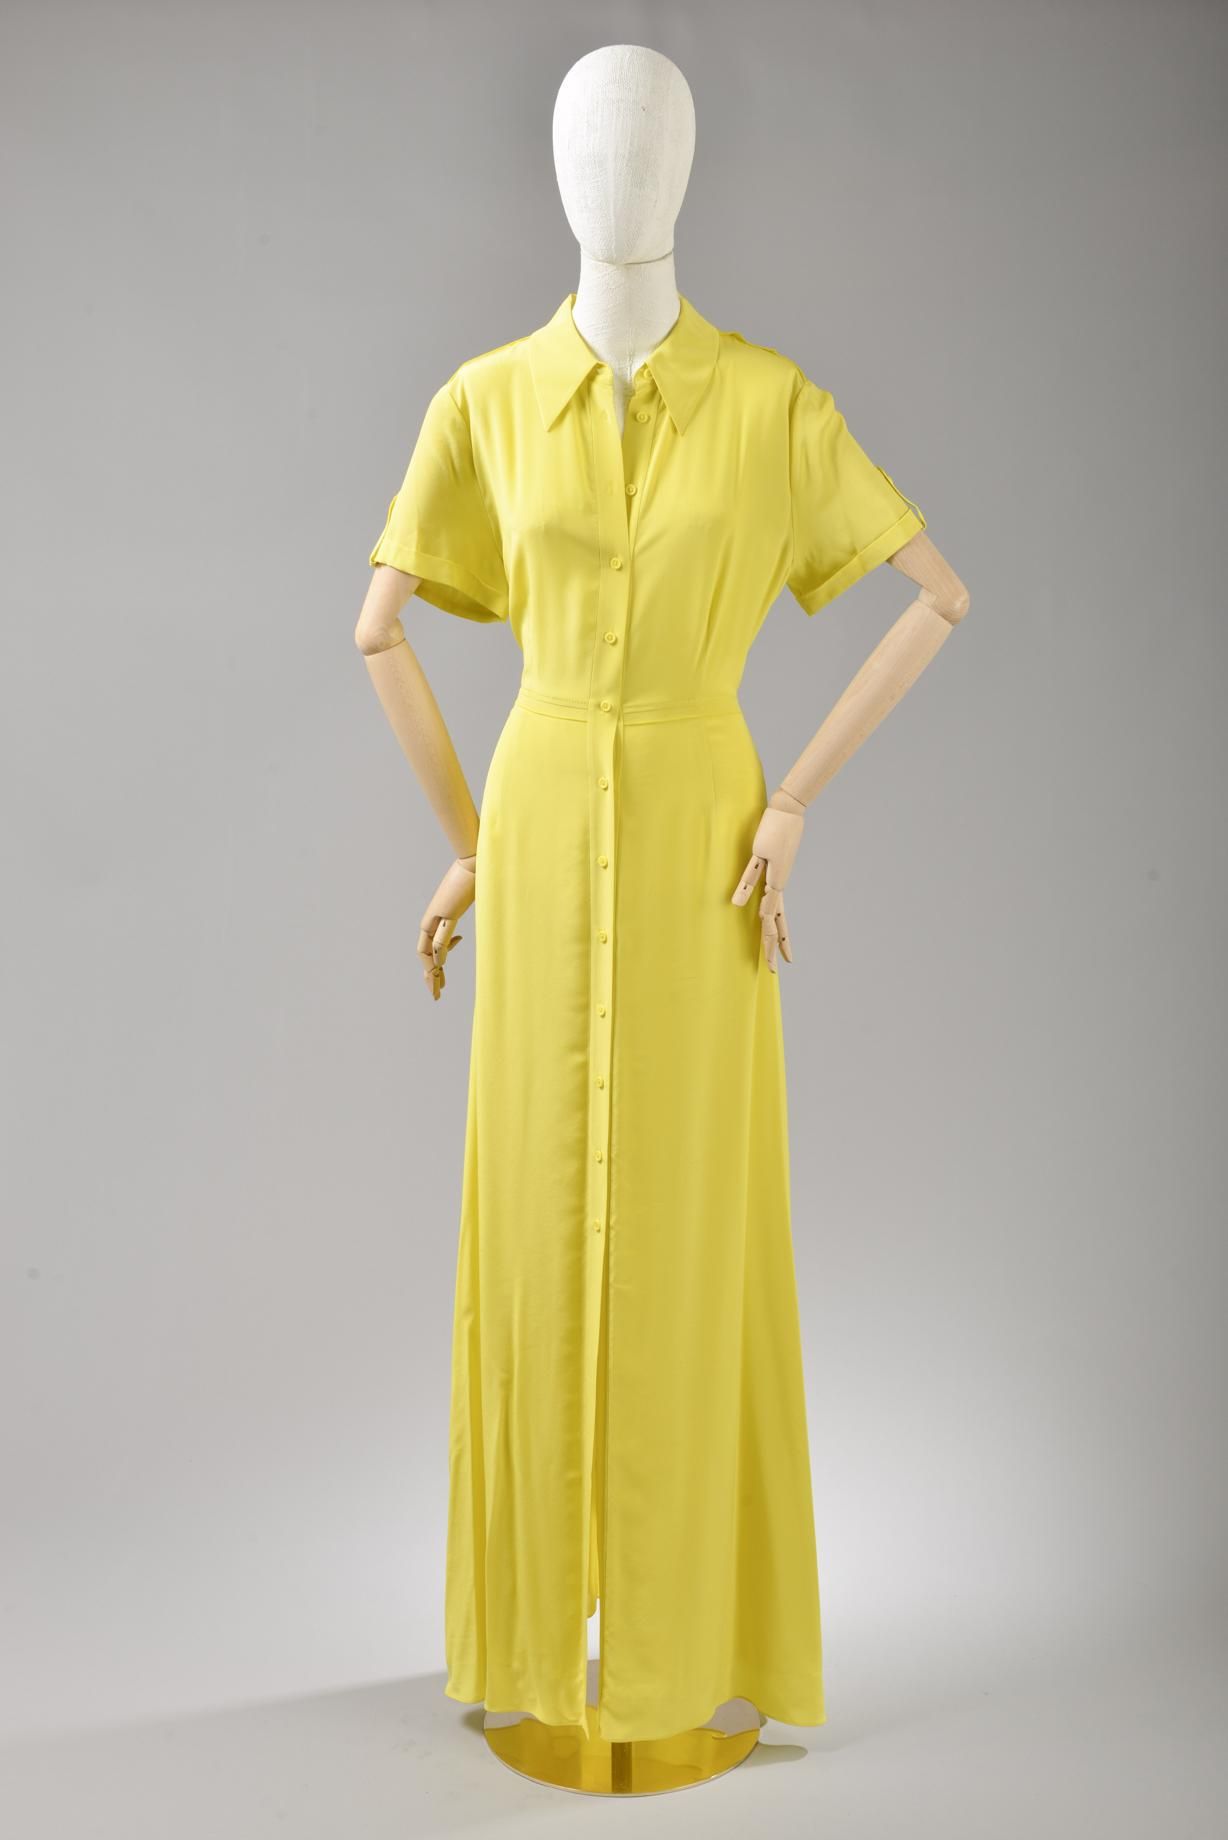 Null *尺寸0 DF - Diane Von Fürstenberg

套装包括。

-长款真丝绉绸衬衫裙，型号为 "DVF Georgia"，颜色为素雅的&hellip;